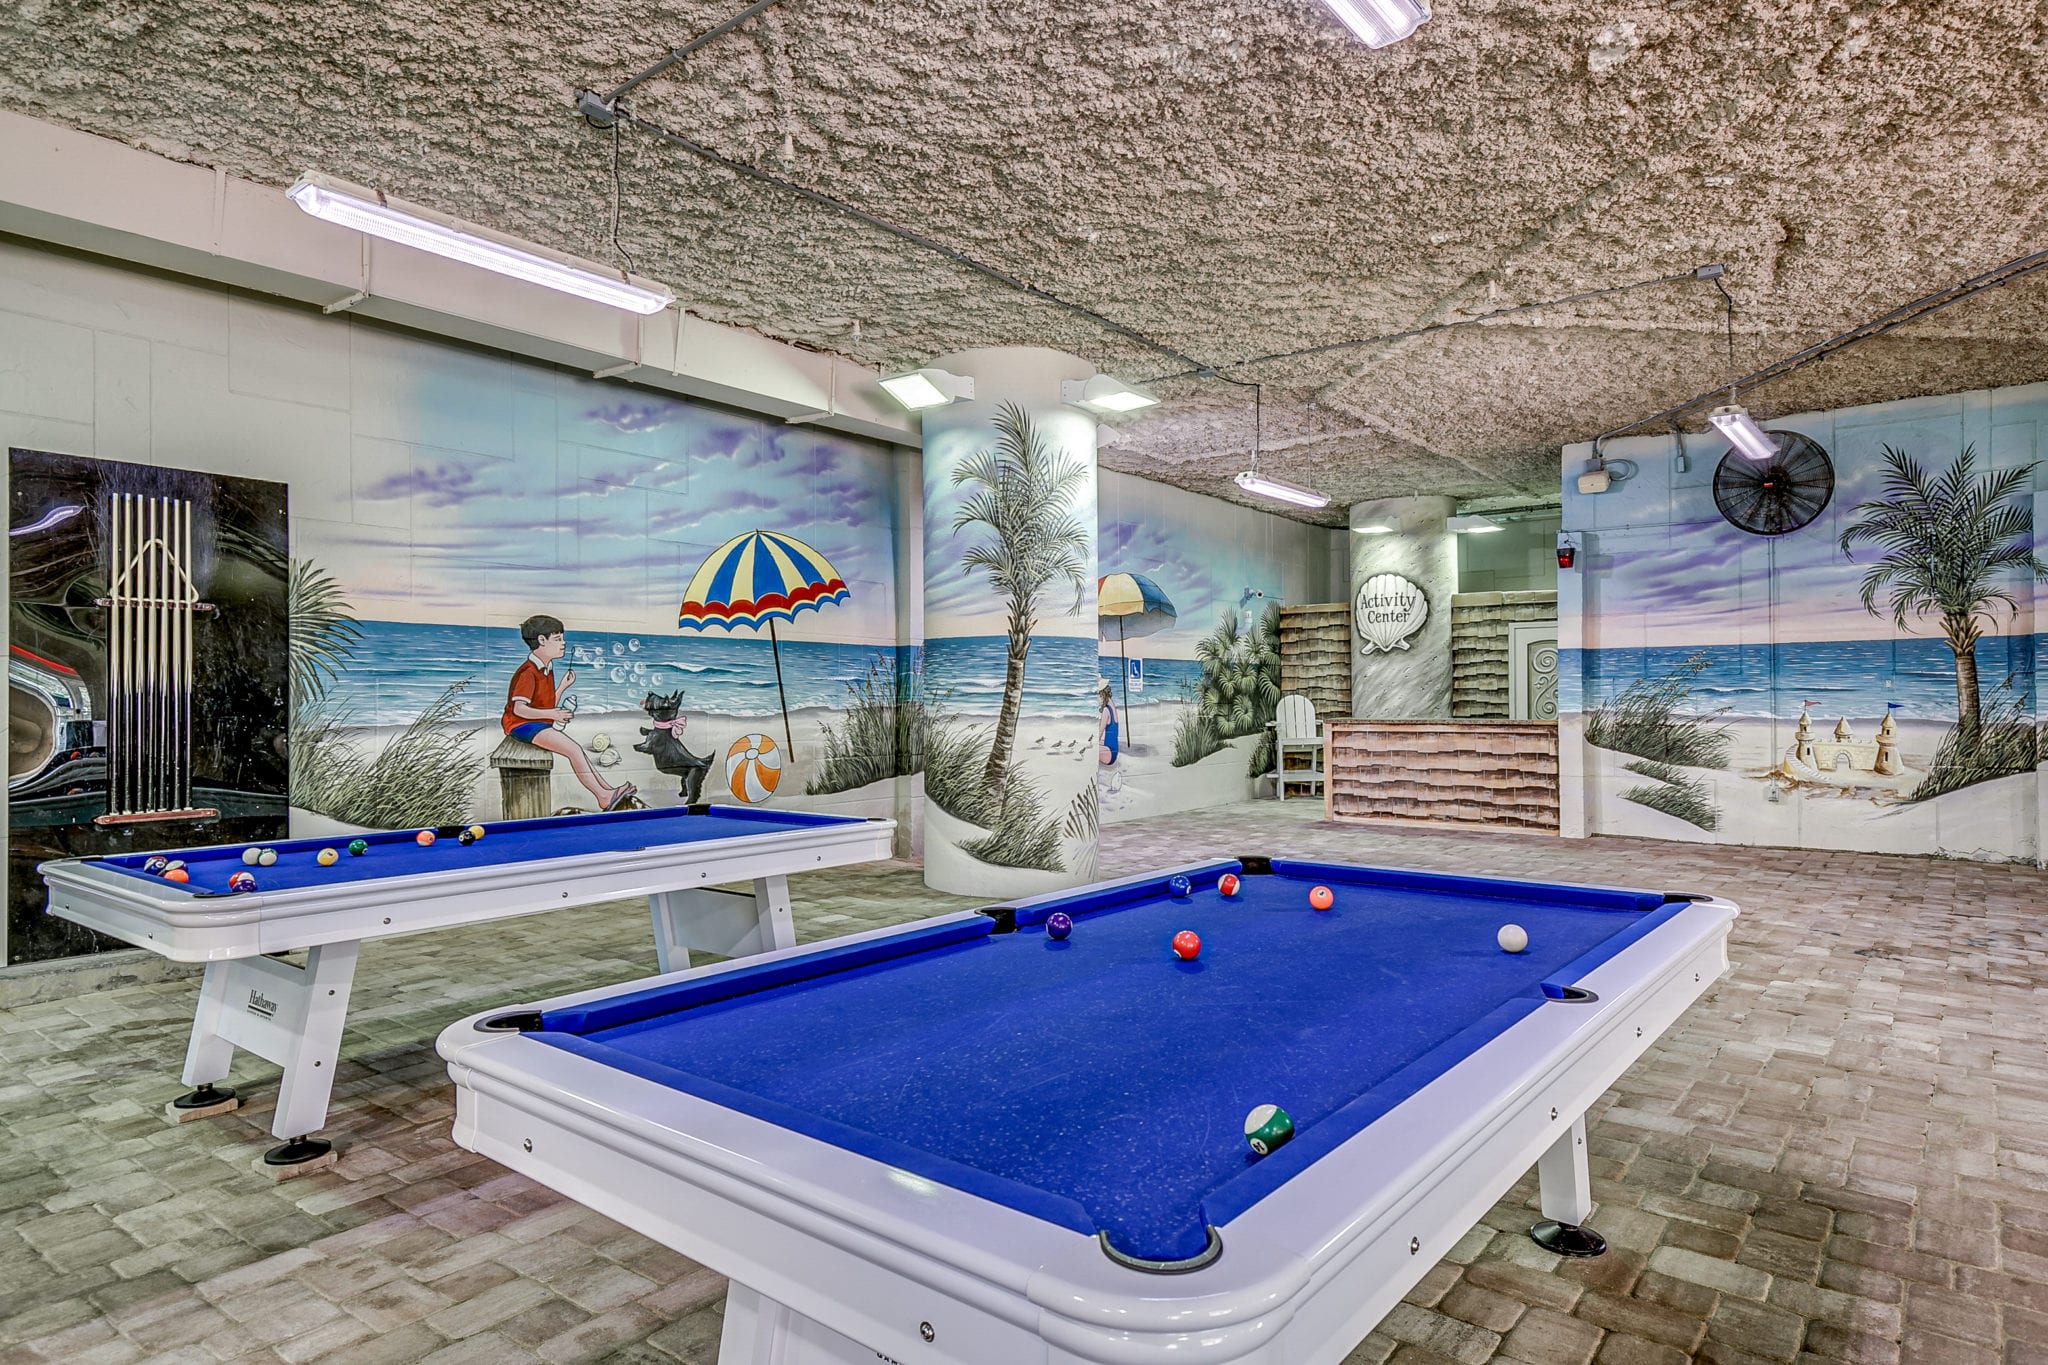 Indoor pool tables at Dunes Village Resort in Myrtle Beach.